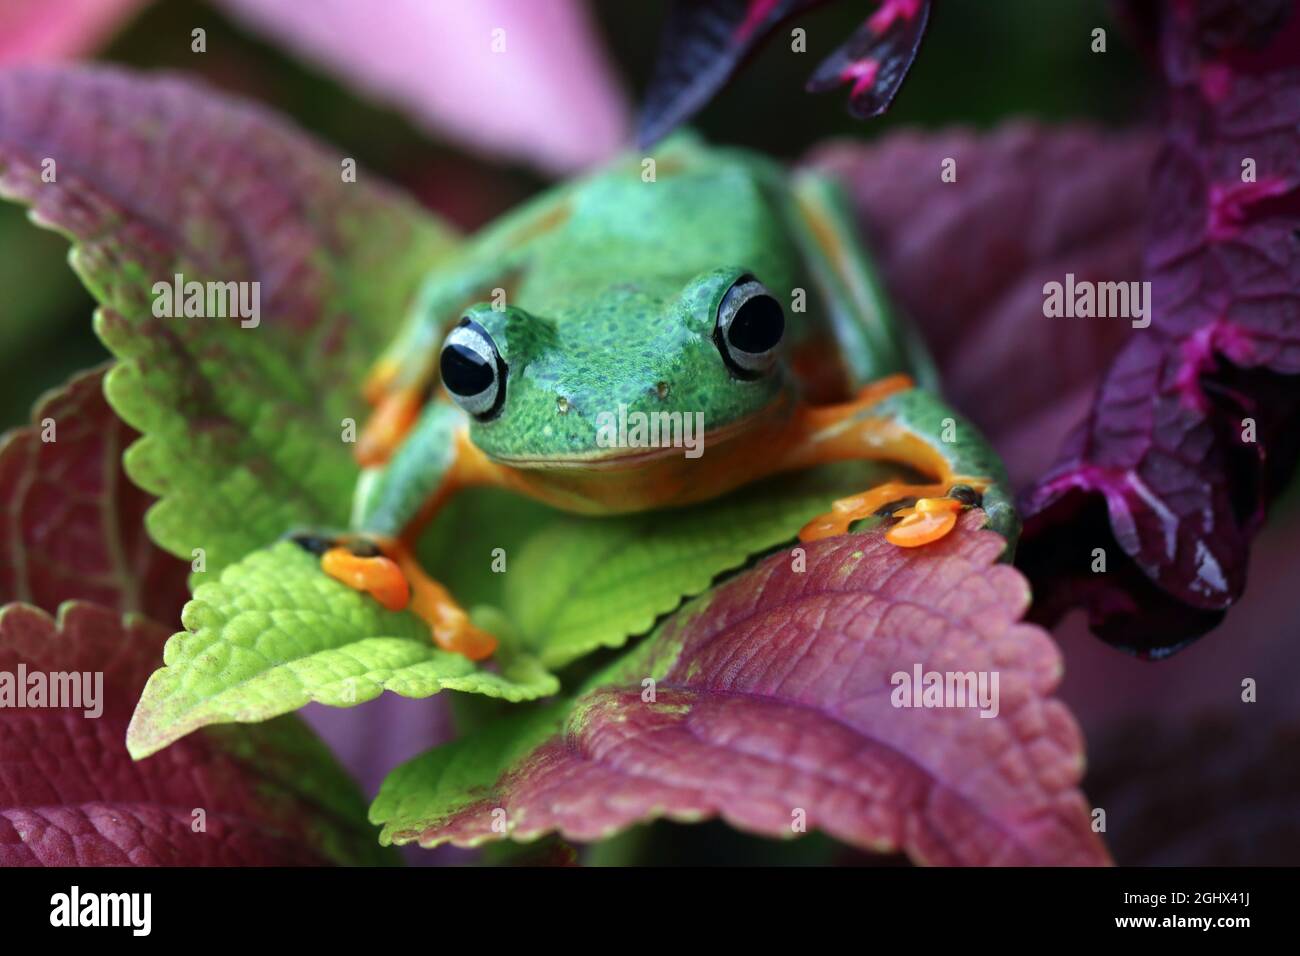 Javan tree frog on a tropical flower, Indonesia Stock Photo